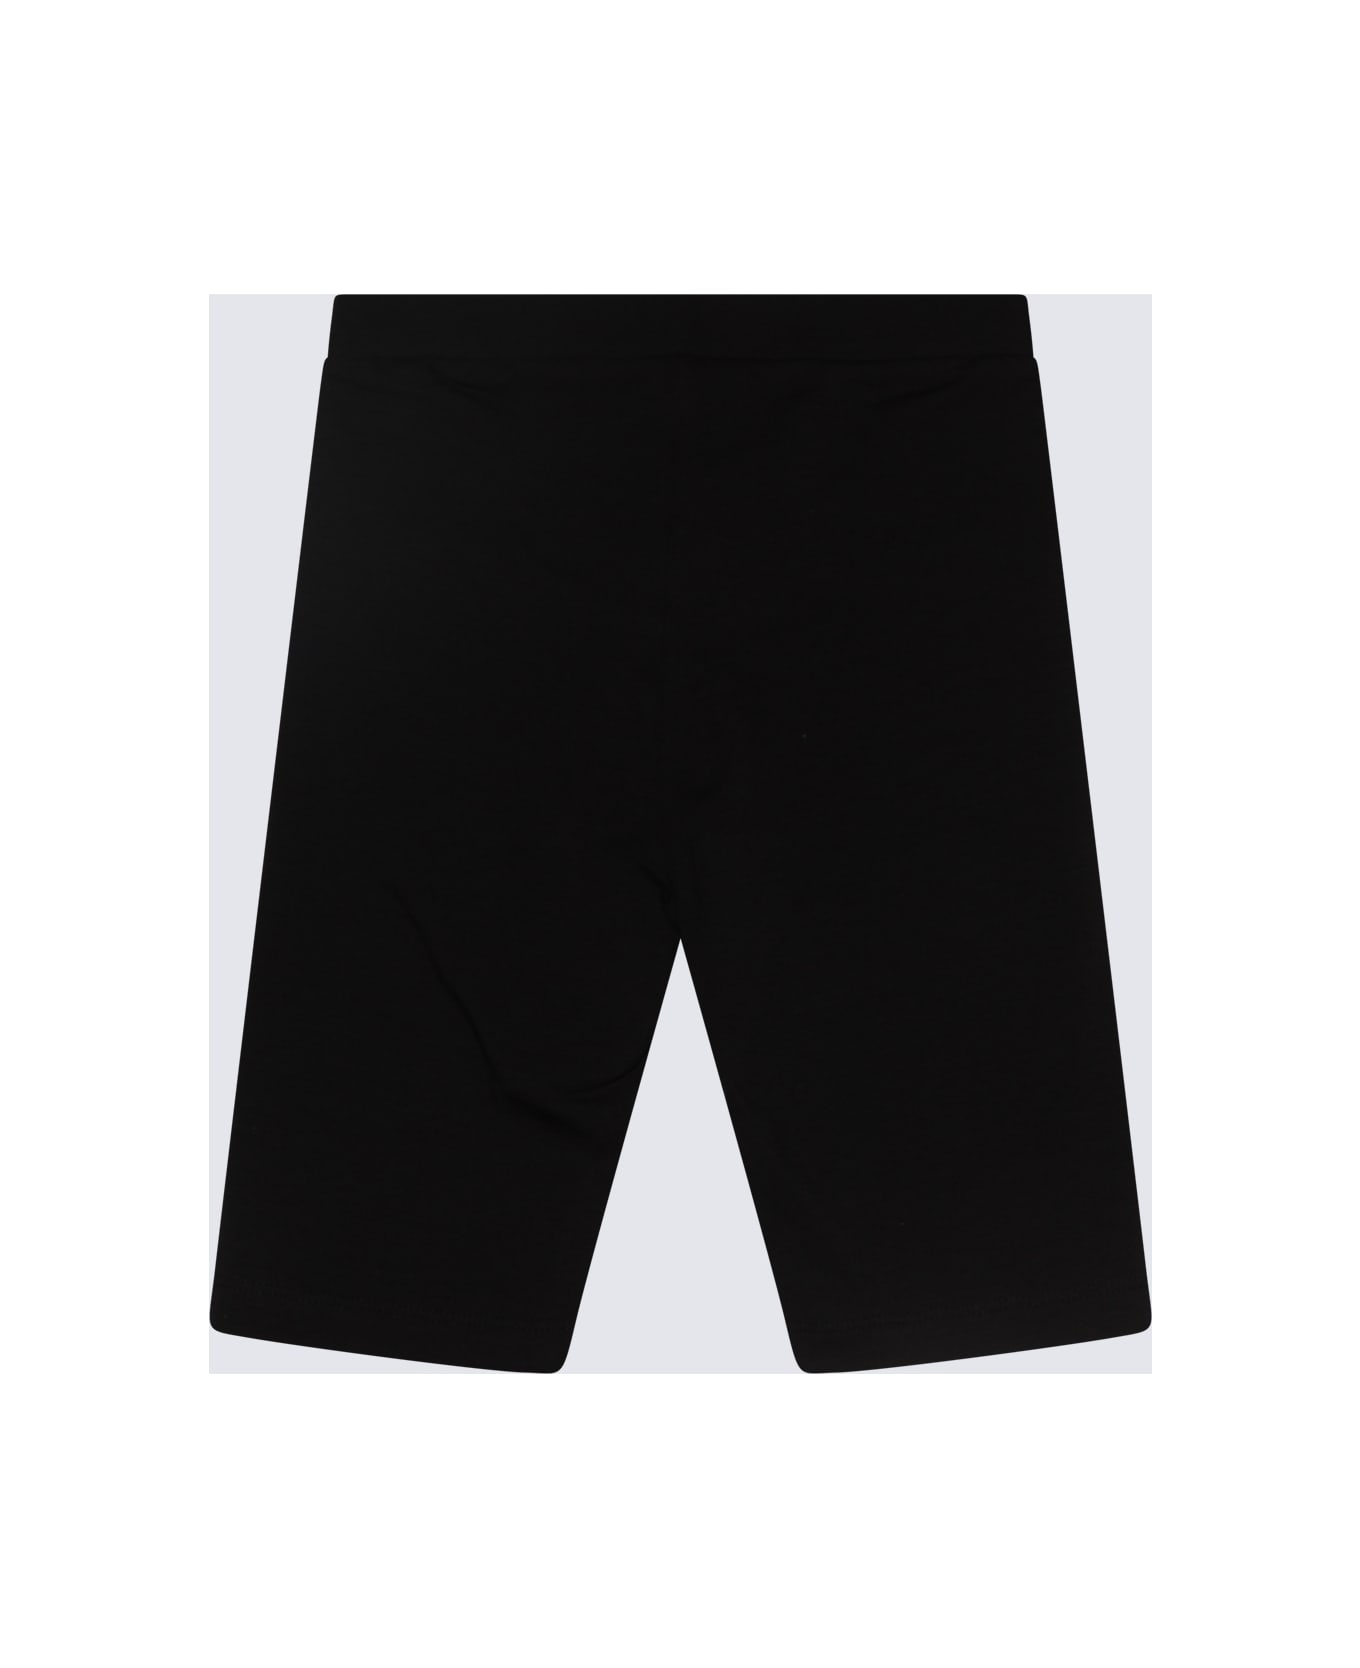 Moschino Black And White Cotton Blend Shorts - Black